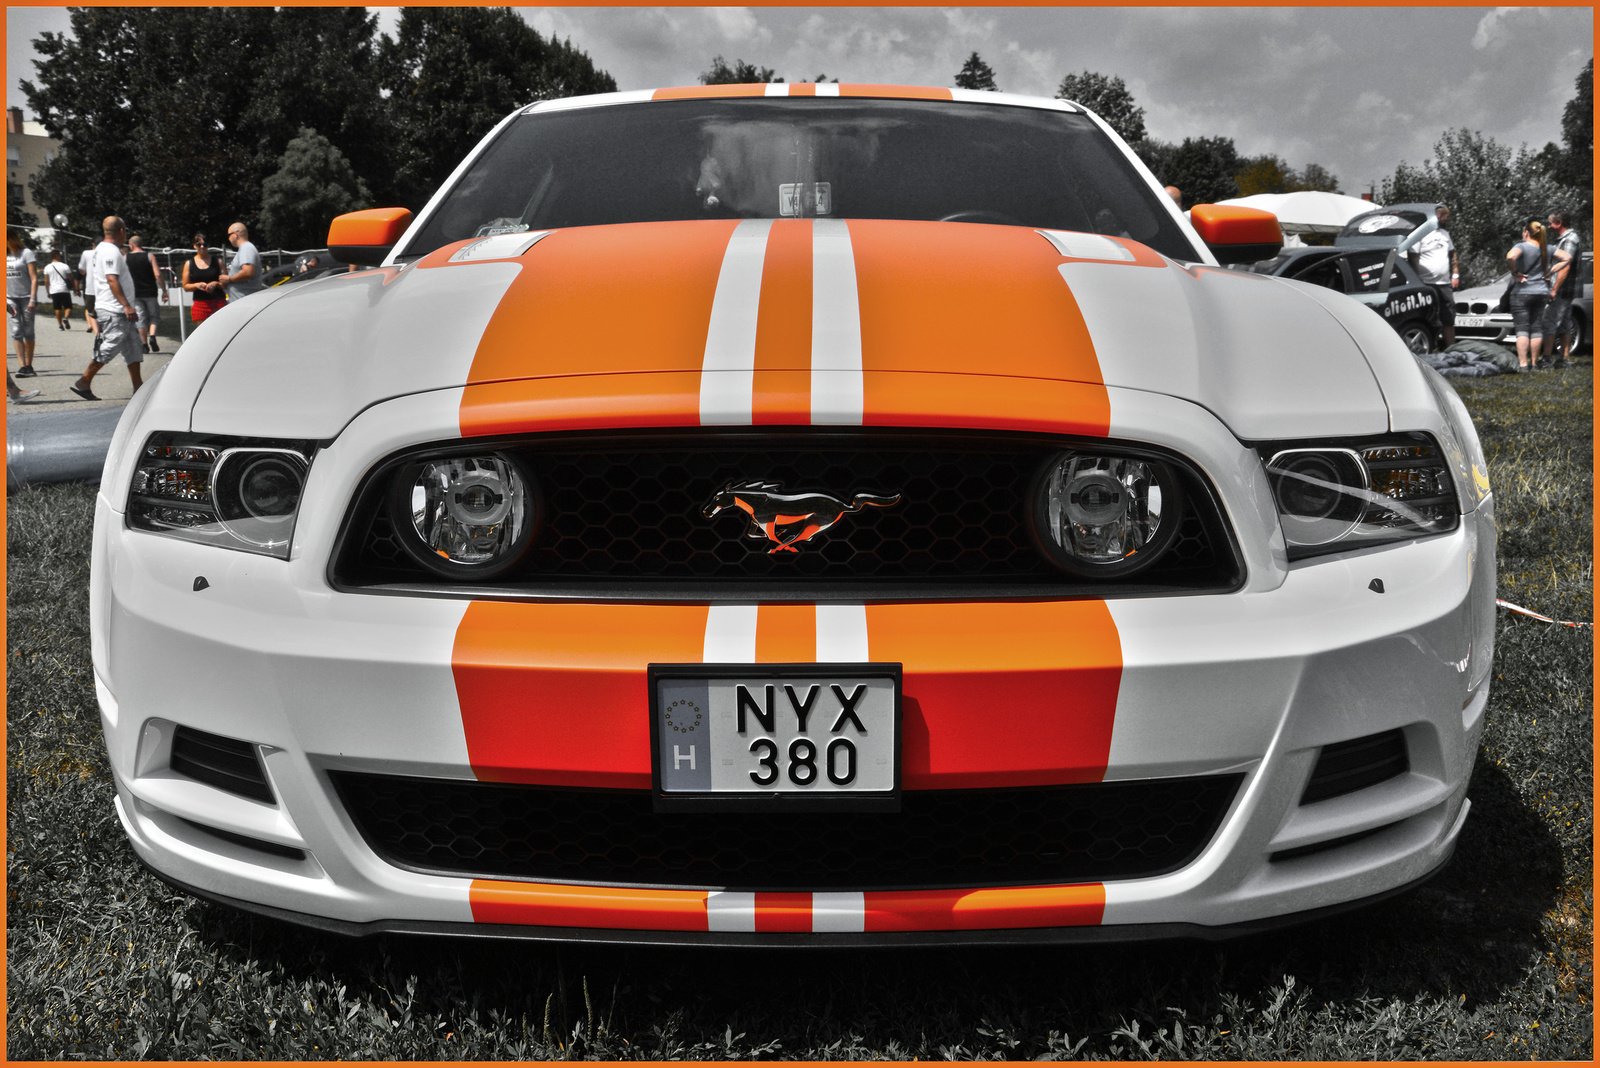 Mustang I